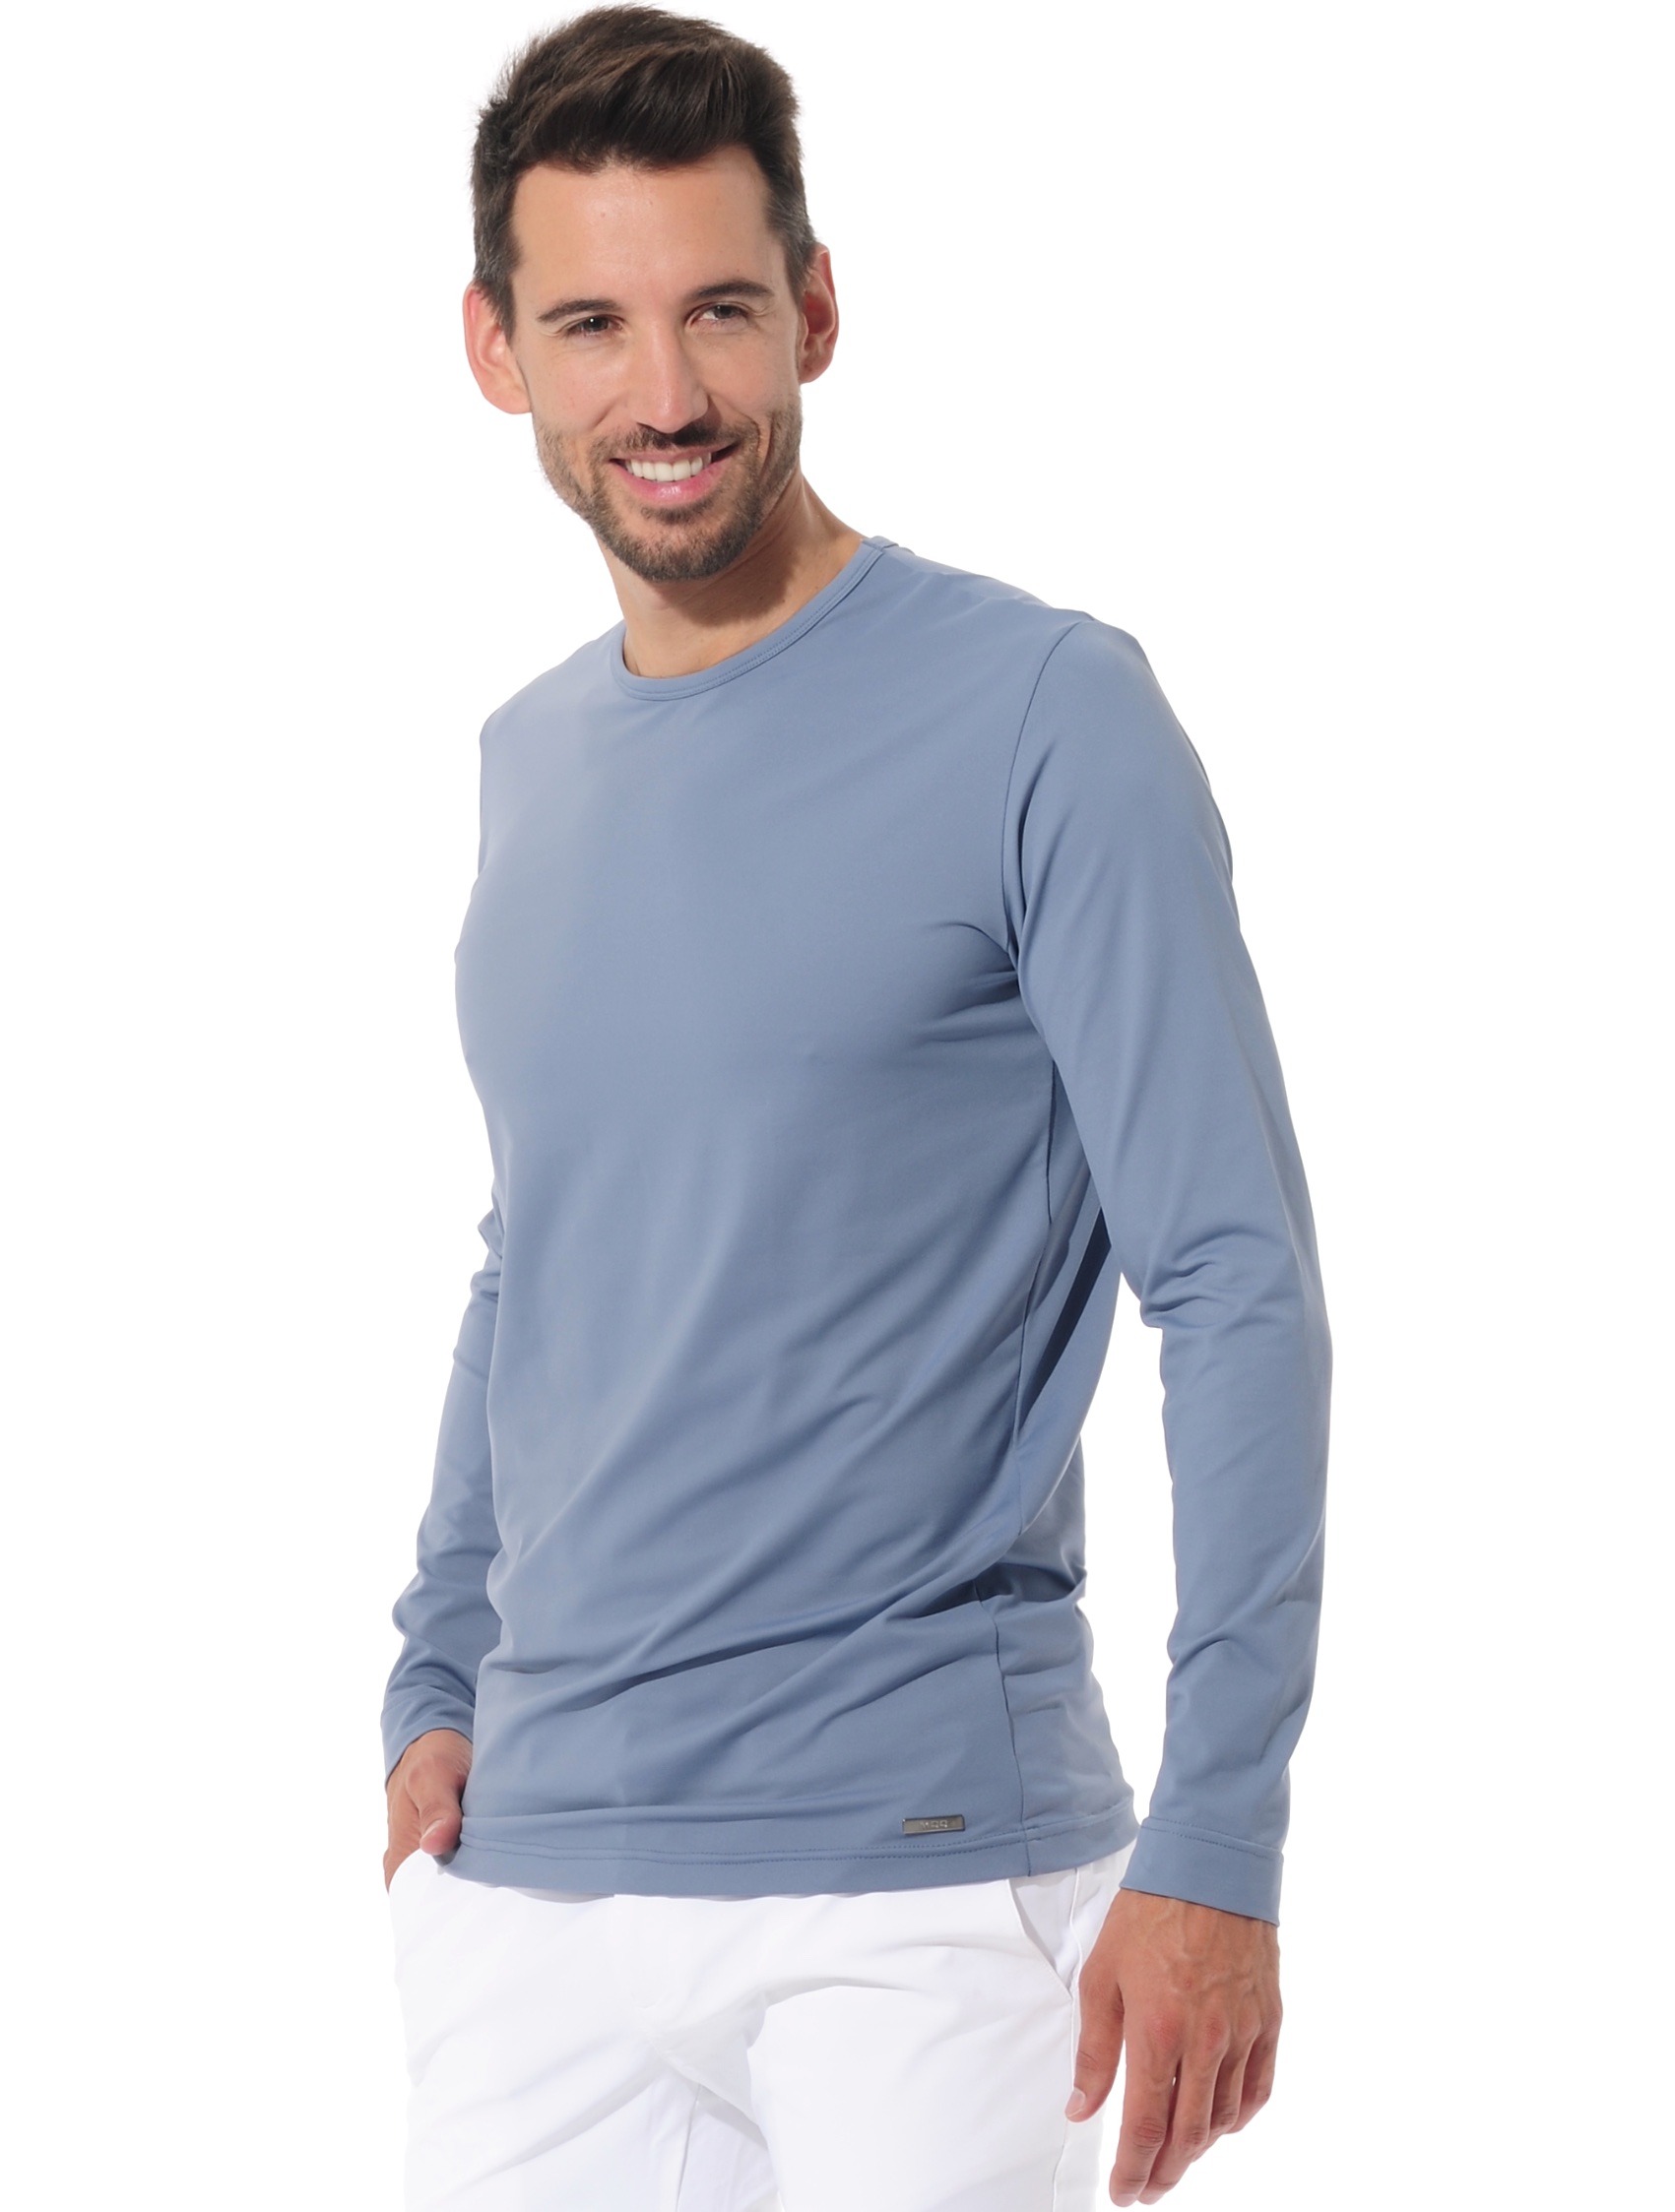 Jersey Langarm Shirt blue ash